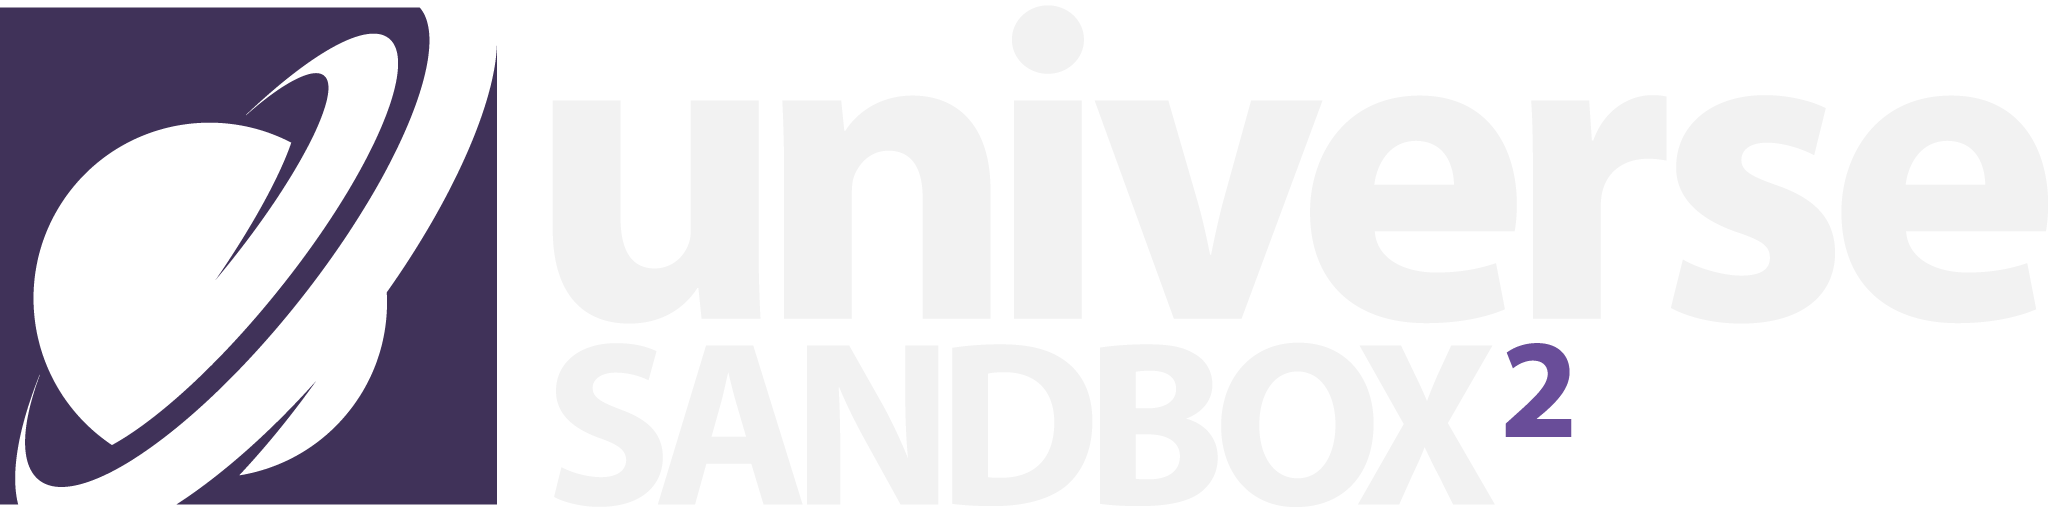 universe-sandbox-2-logo-for-dark-backgrounds